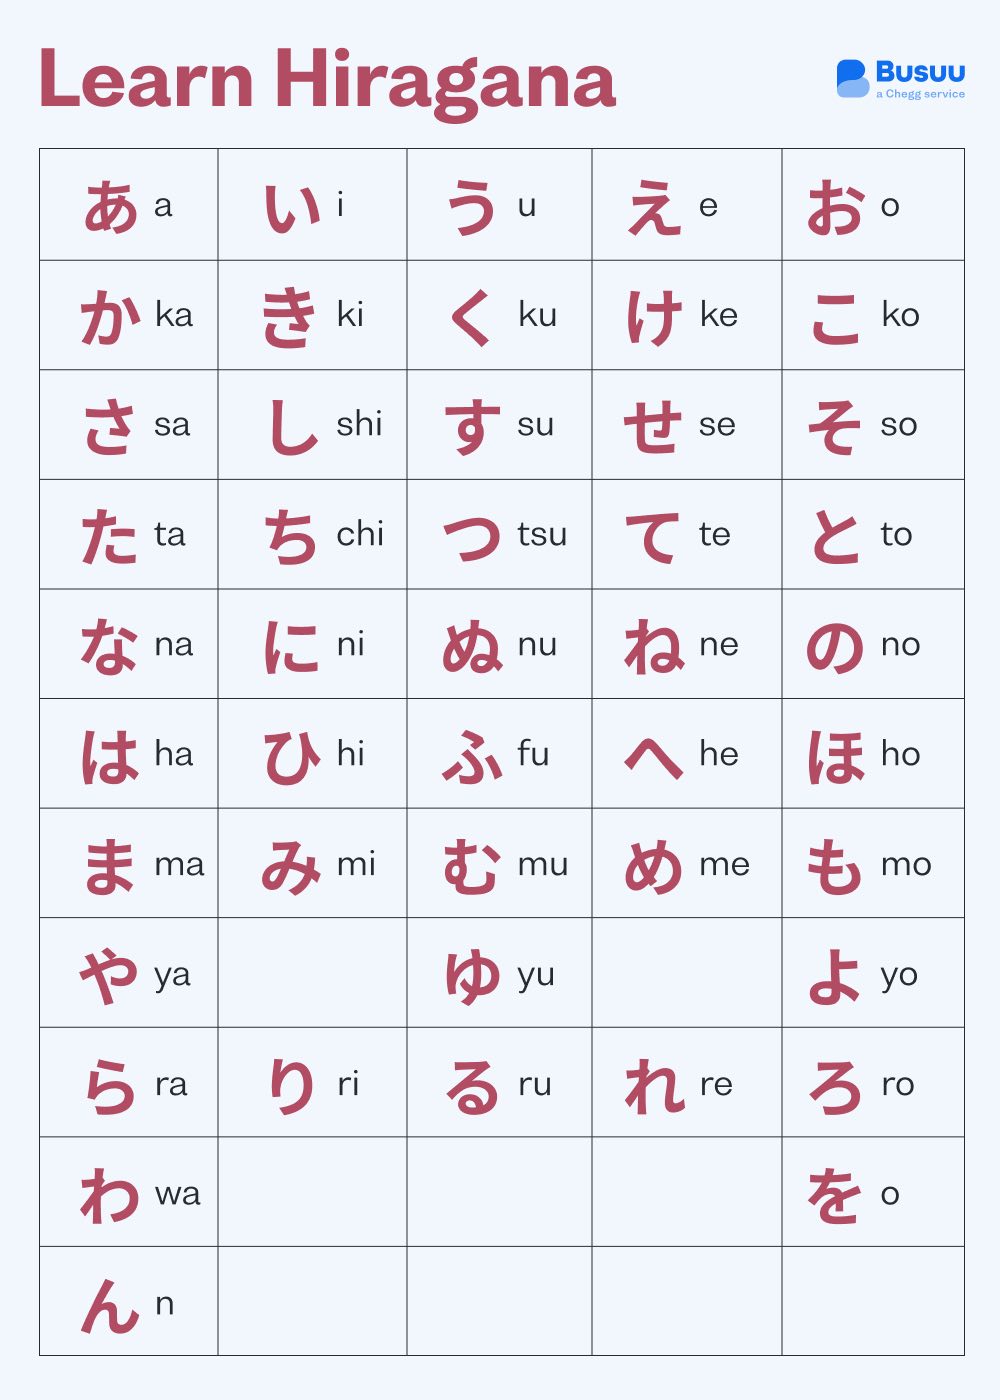 Learn hiragana with mnemonics on Busuu